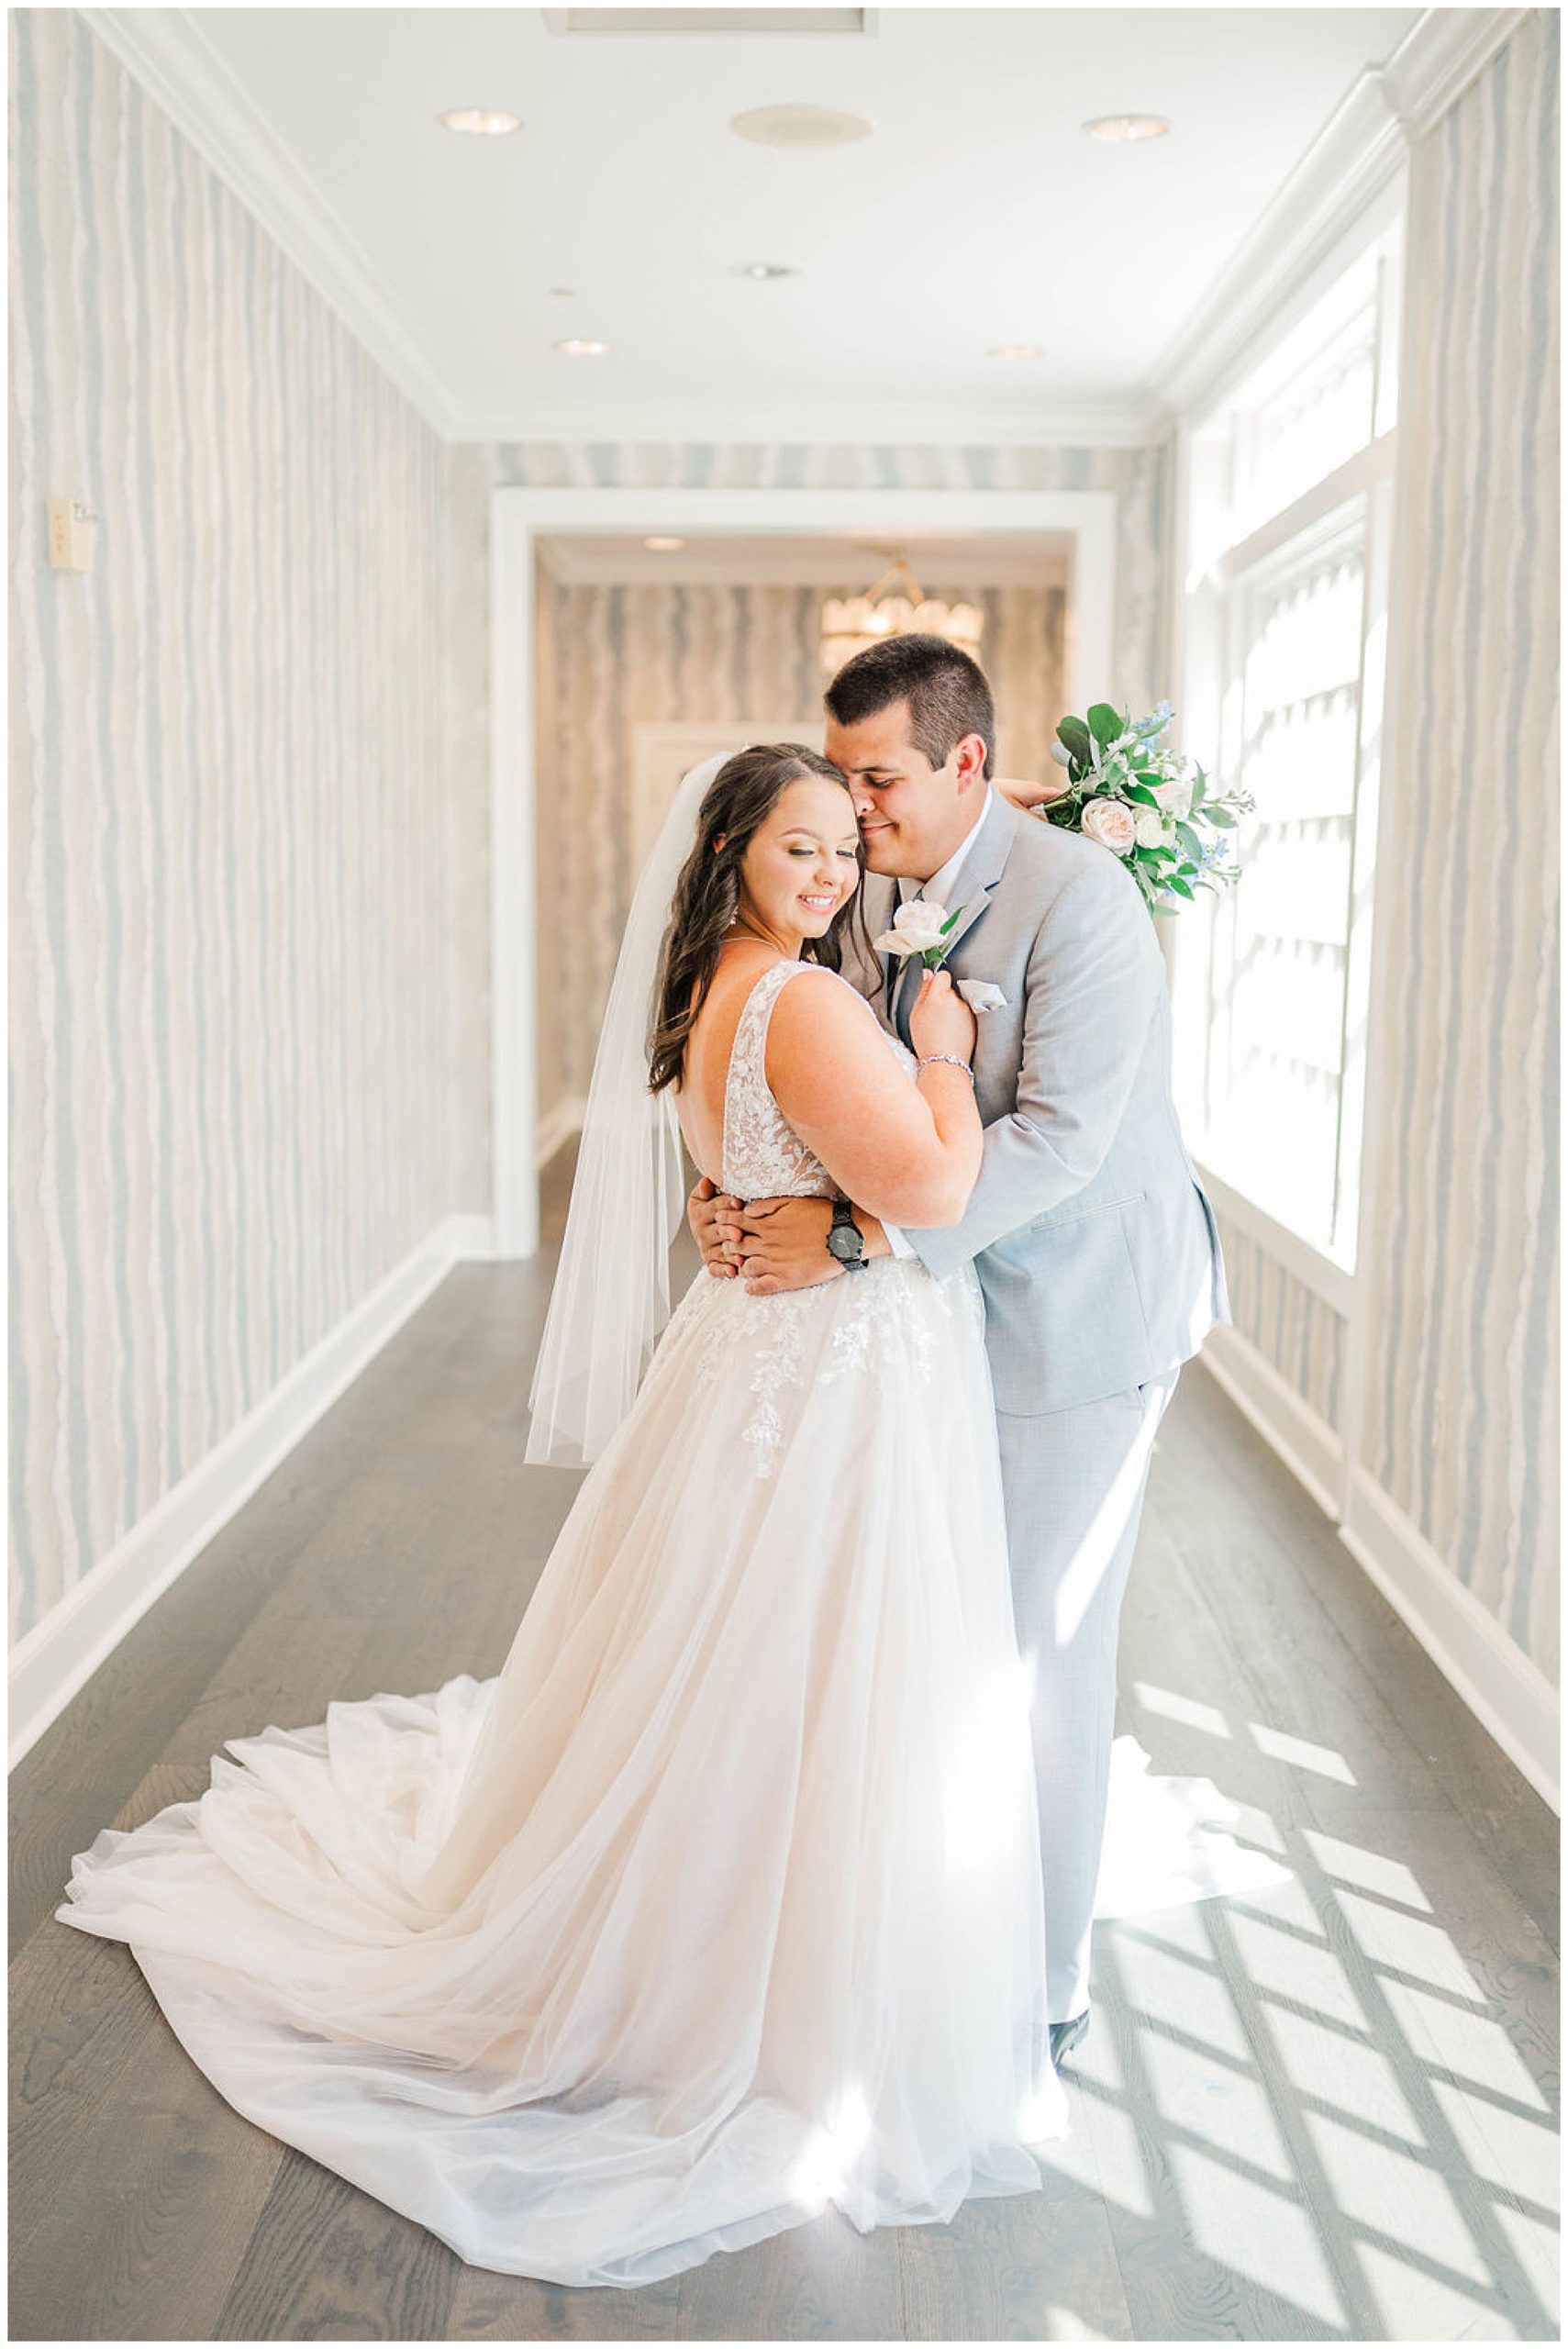 groom nuzzling his bride in a hallway at their wakefield plantation wedding